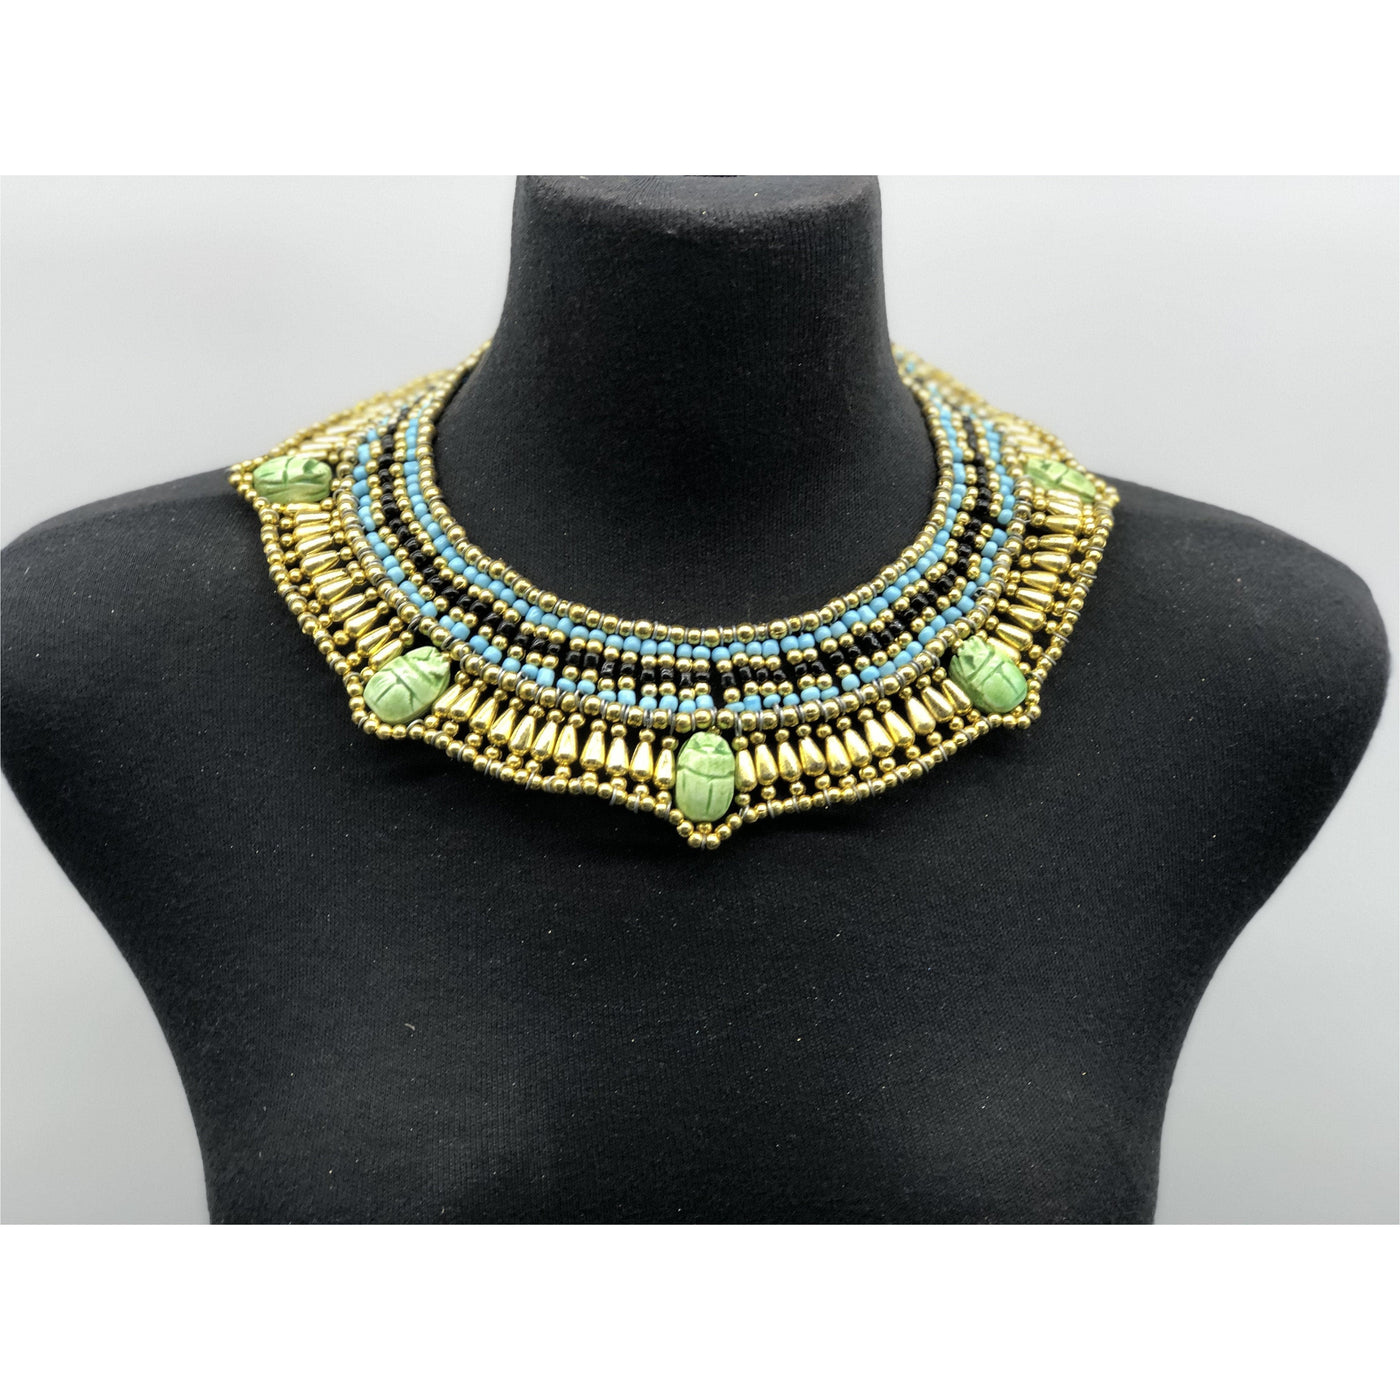 Queen Cleopatra necklace - Trufacebygrace